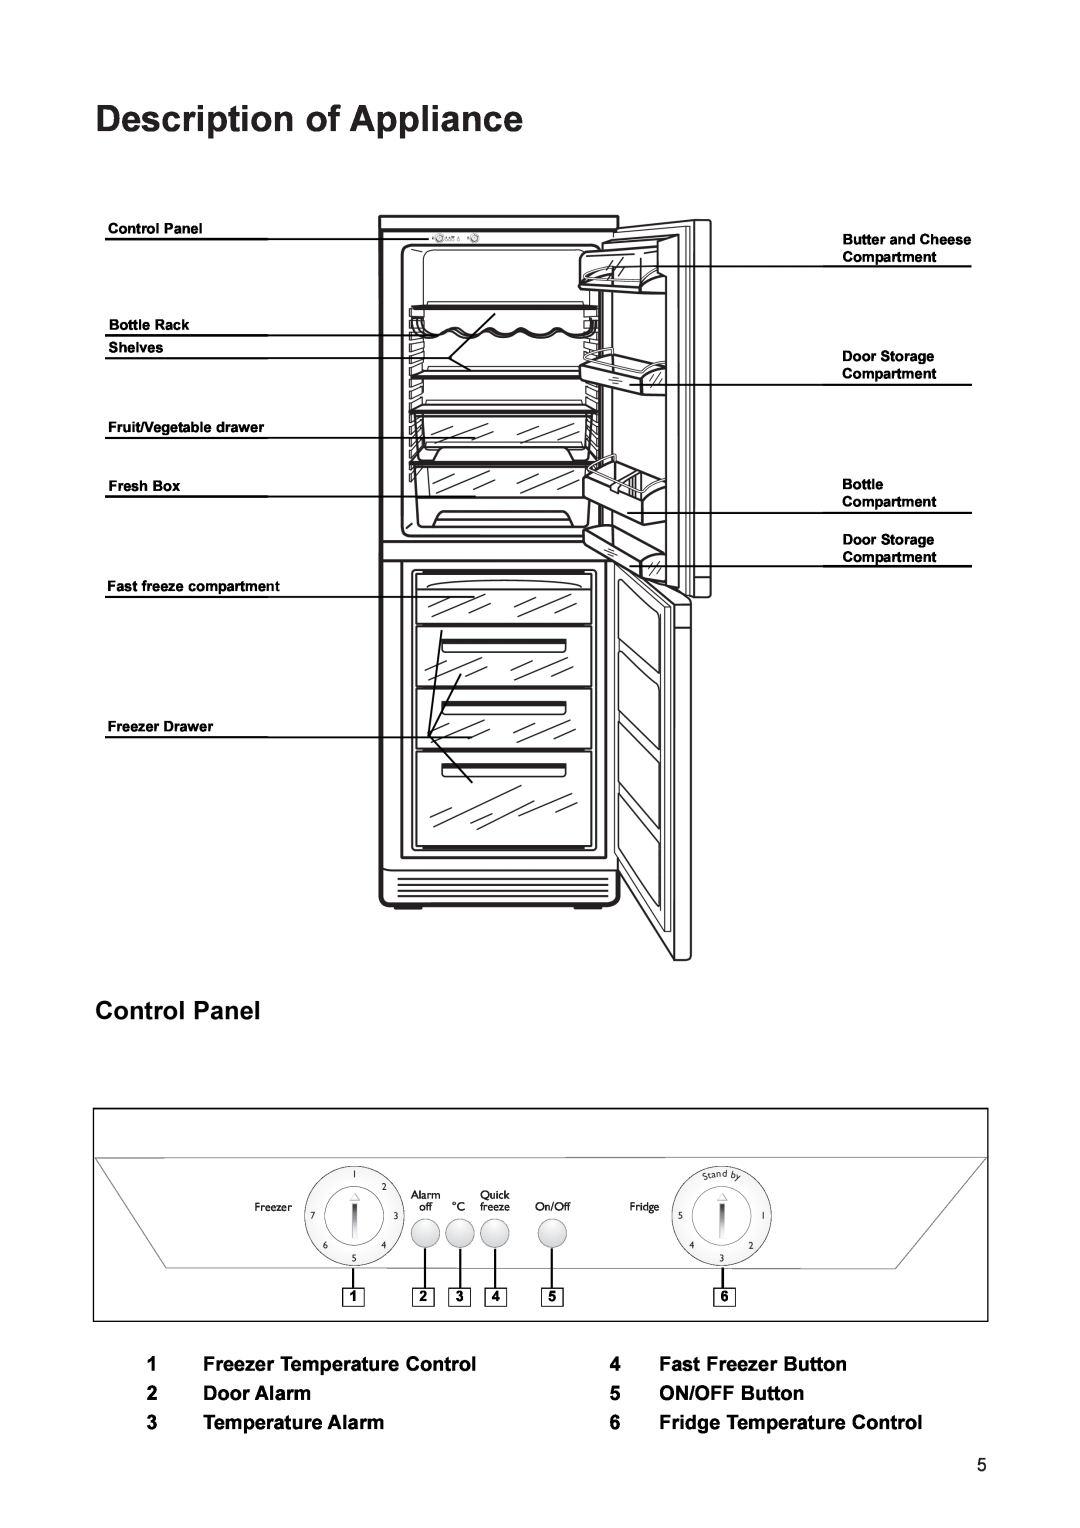 John Lewis JLFFS2002 Description of Appliance, Control Panel, Freezer Temperature Control, Fast Freezer Button, Door Alarm 